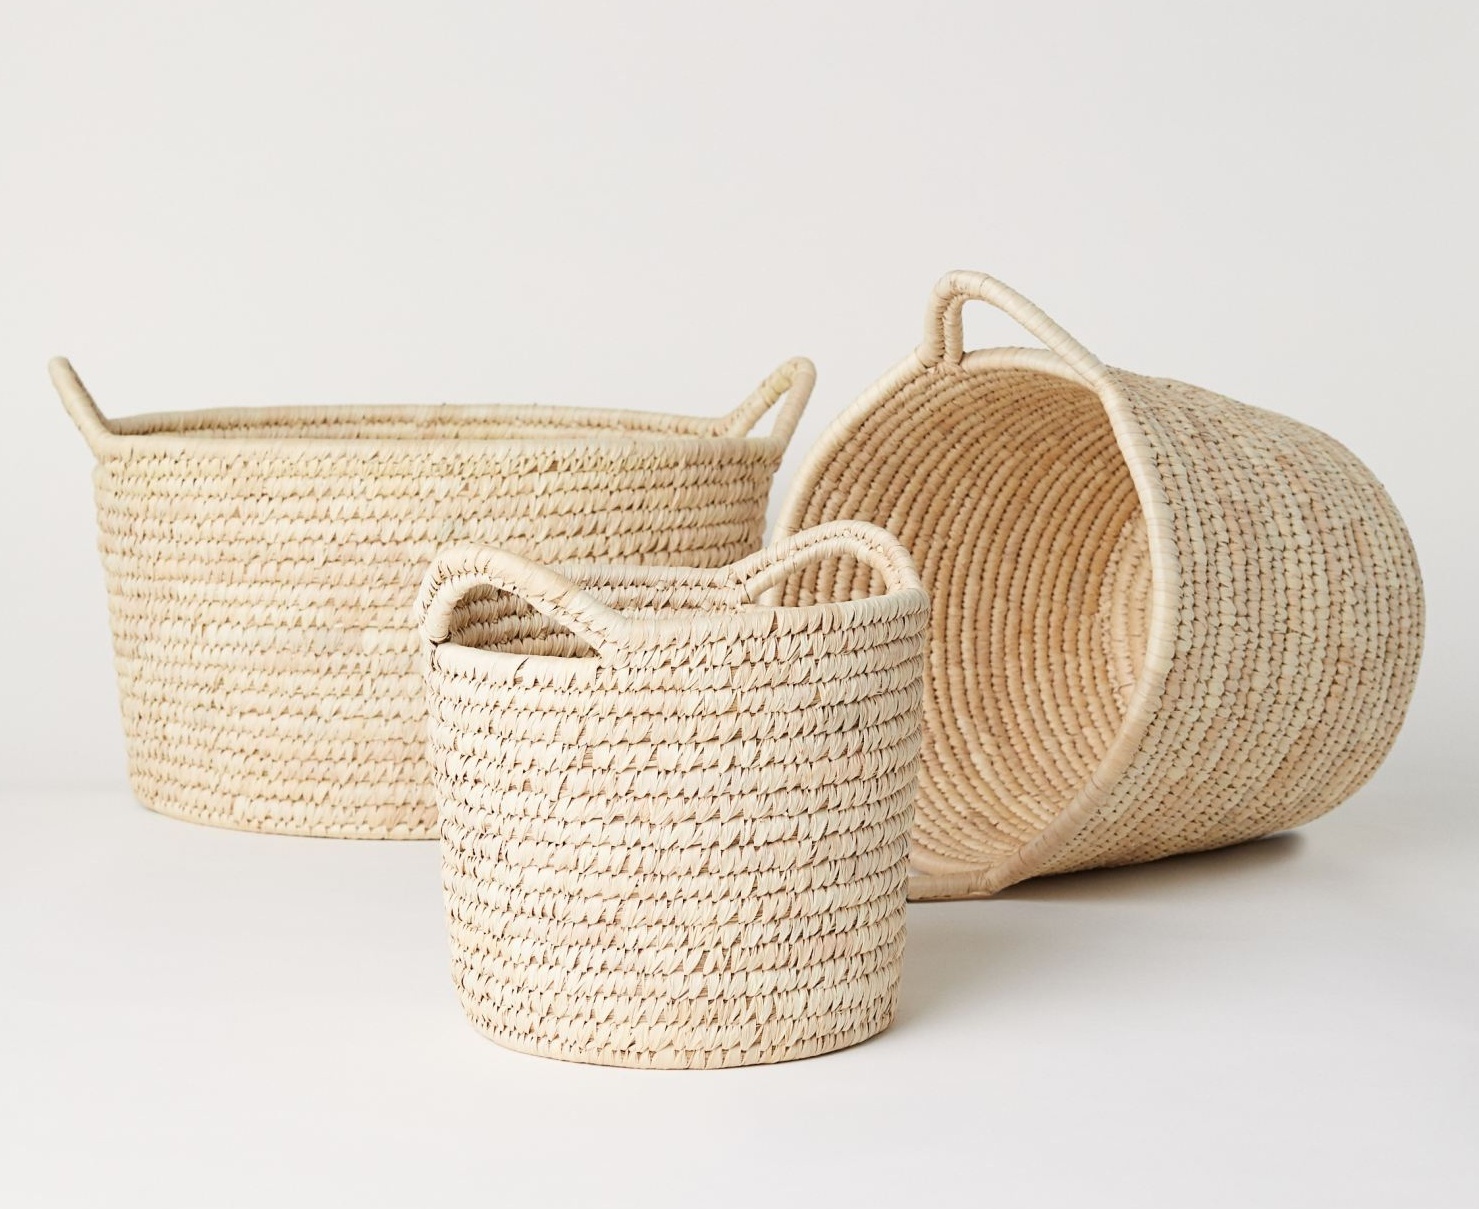 Japandi design 100% straw baskets